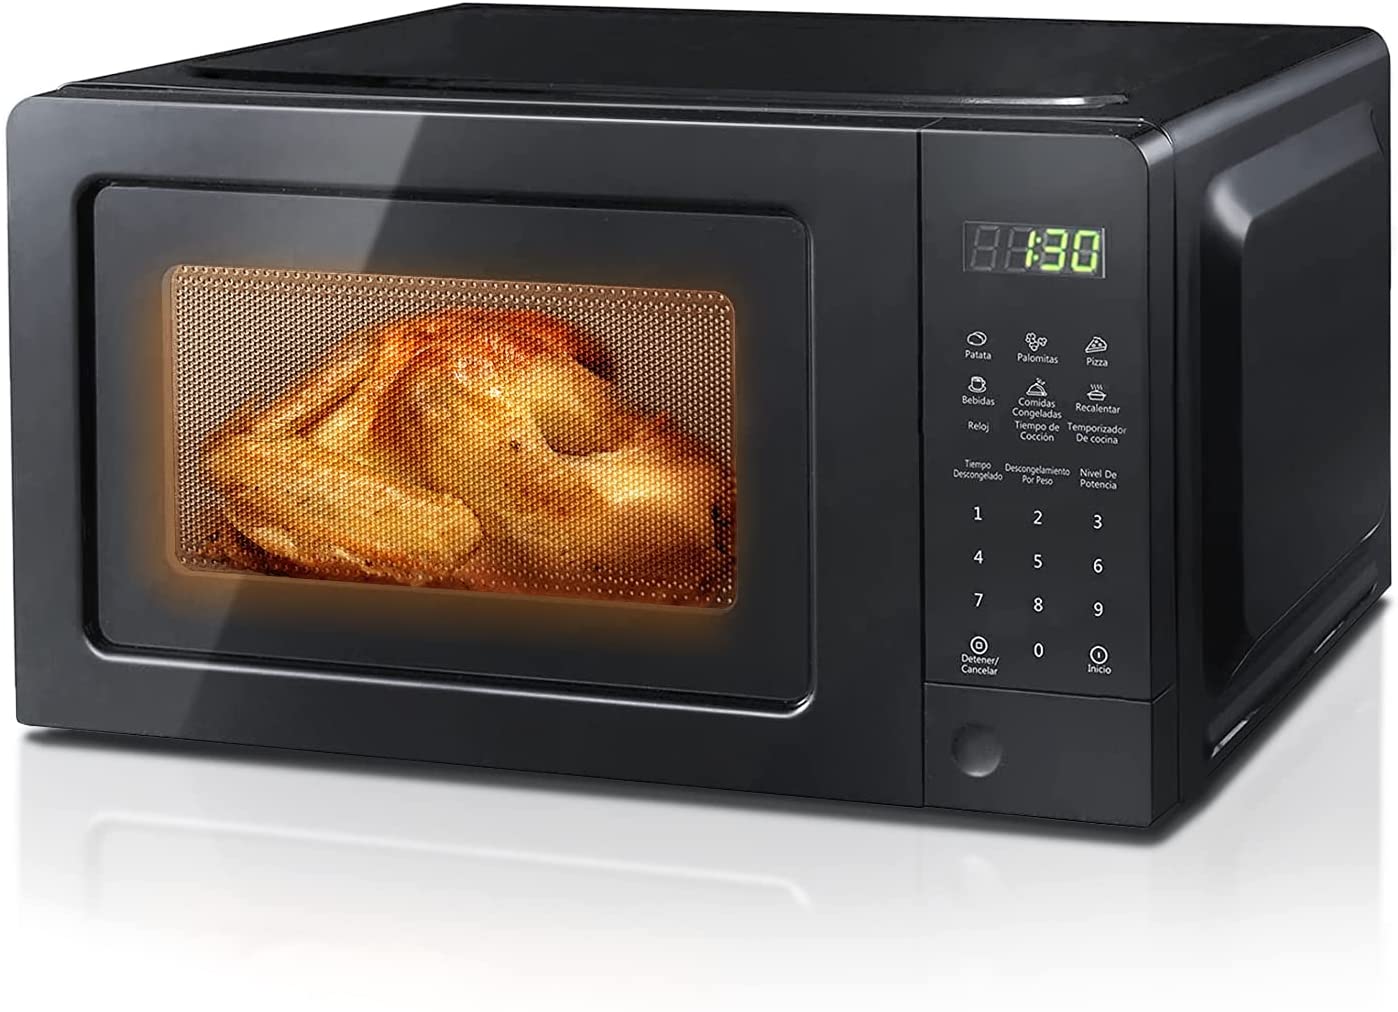 smad-microwave